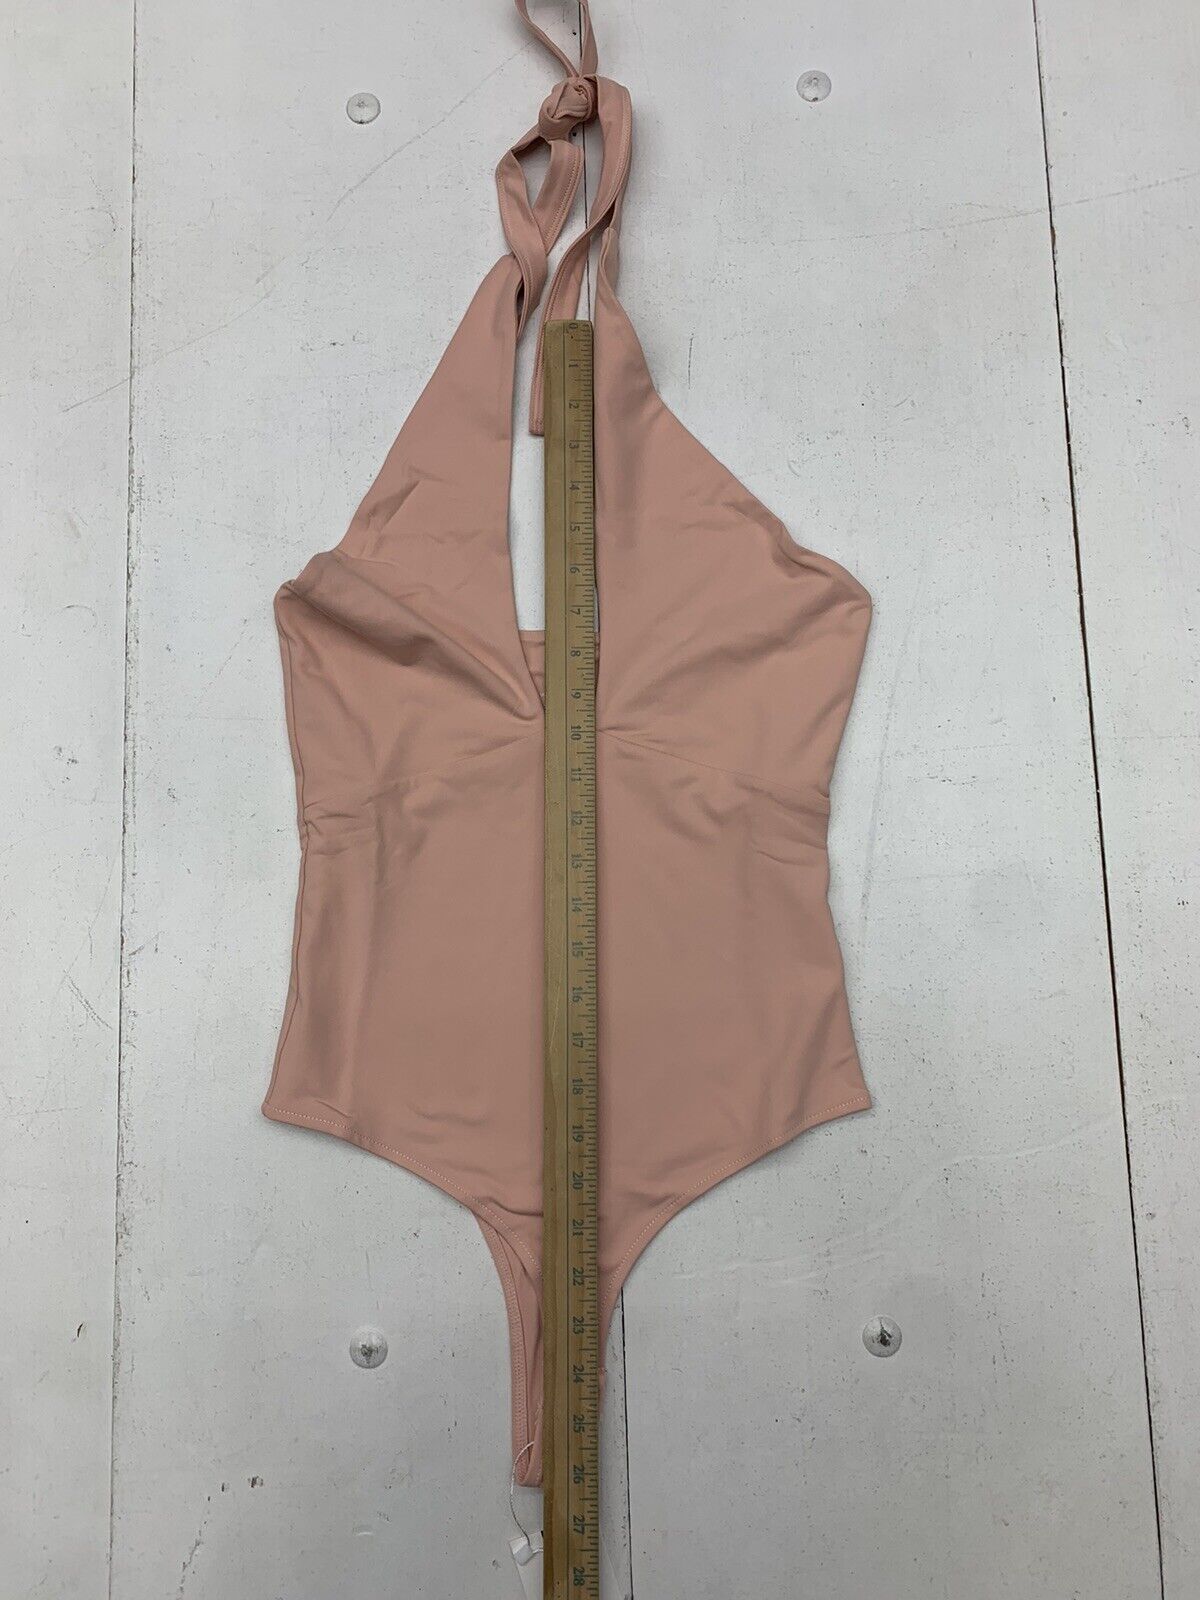 Reoria Womens Blush Pink Bodysuit Size Small - beyond exchange